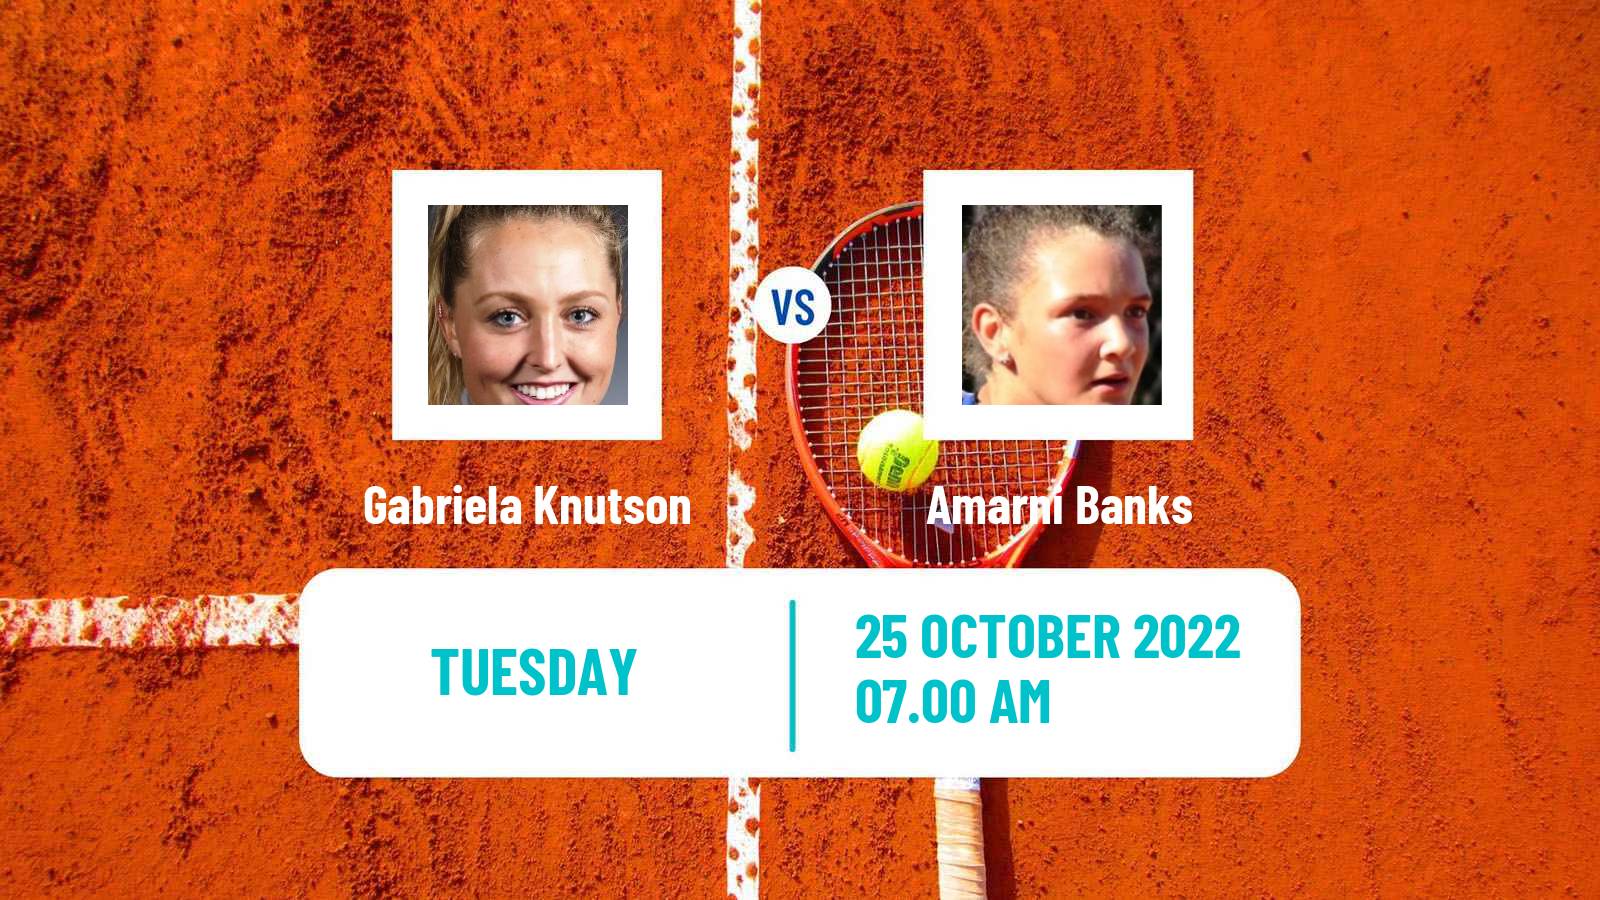 Tennis ITF Tournaments Gabriela Knutson - Amarni Banks